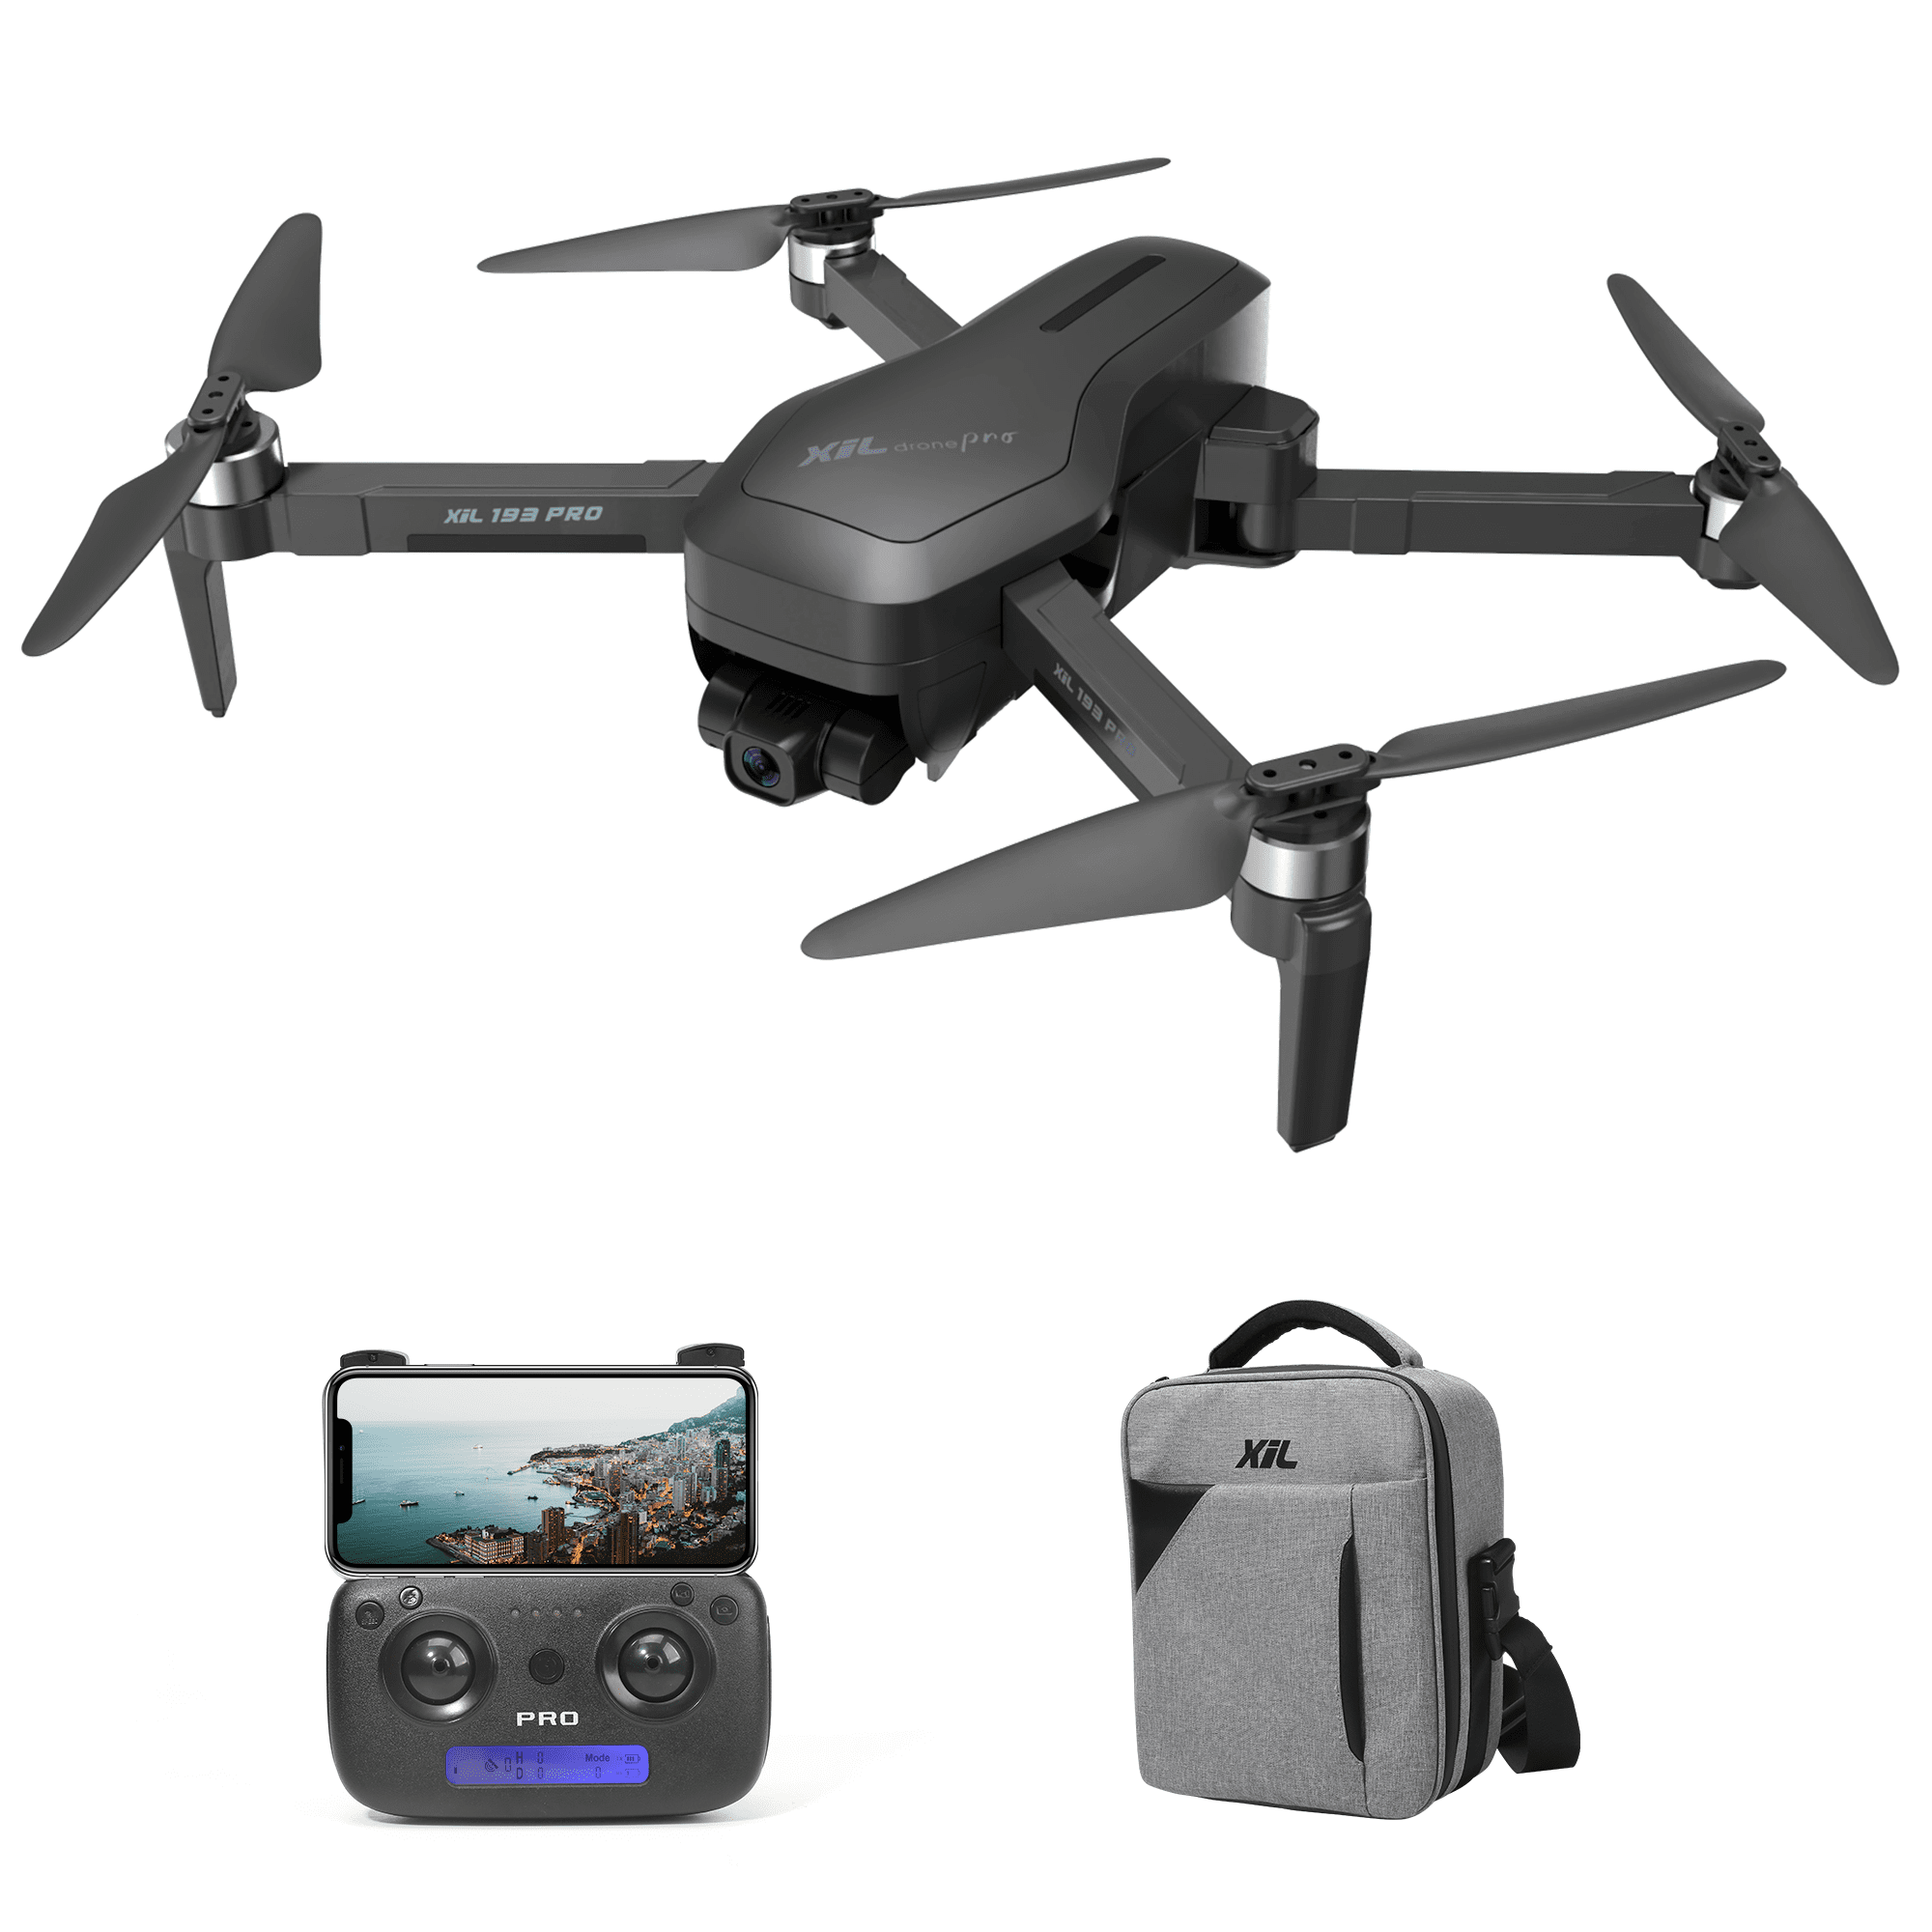 Cooligg X193 Foldable GPS Drone 4K FHD Camera 2 Axis Anti-Shake Gimbal